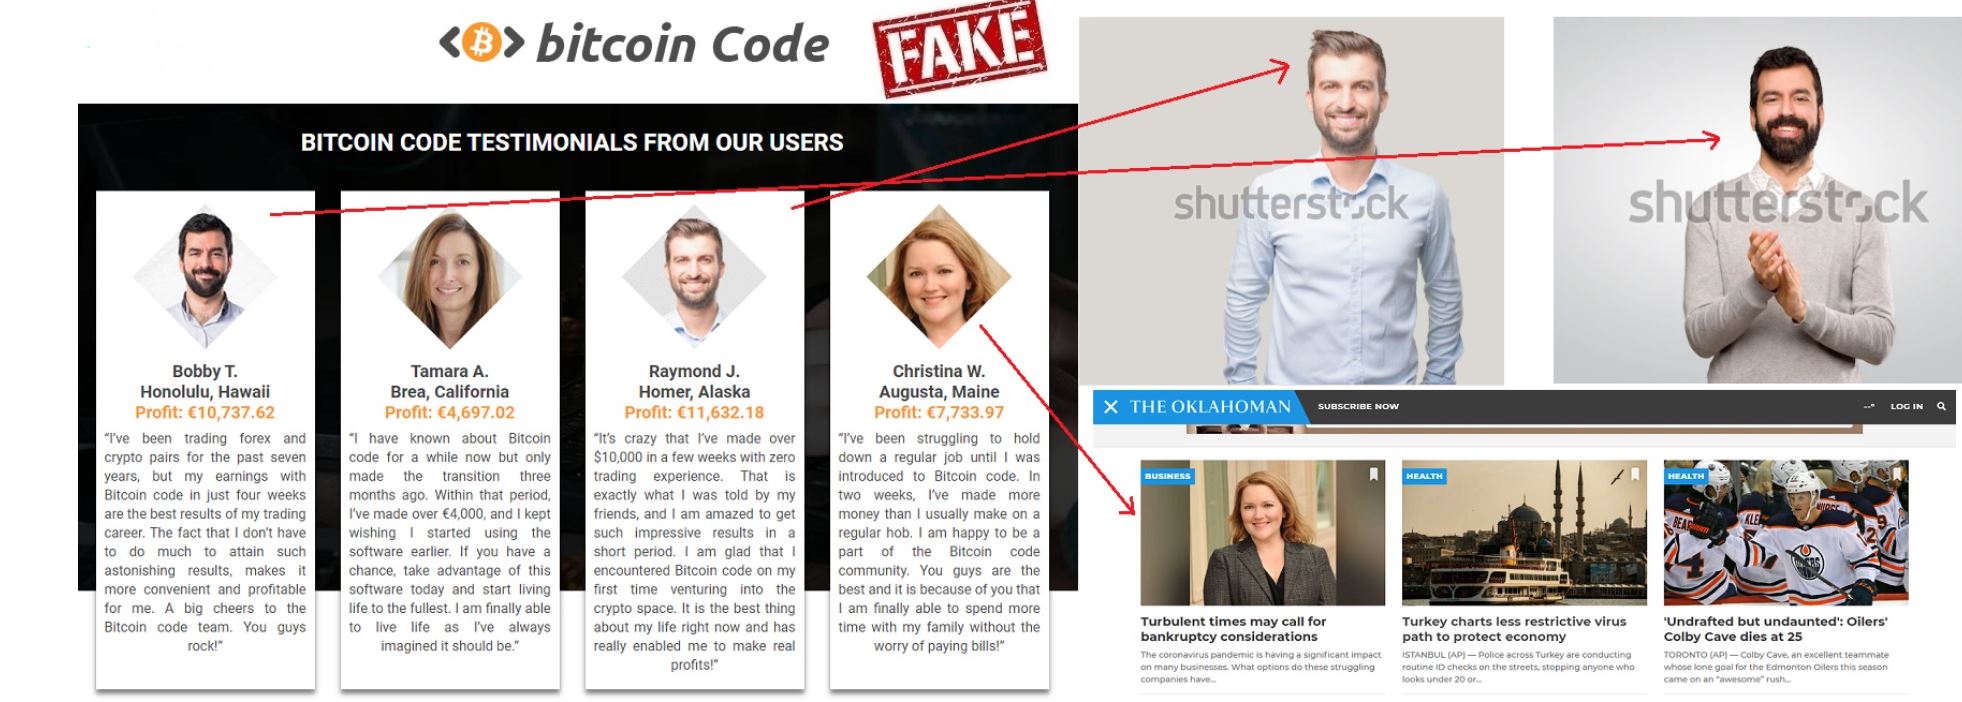 Testimonianze false di Bitcoin Code